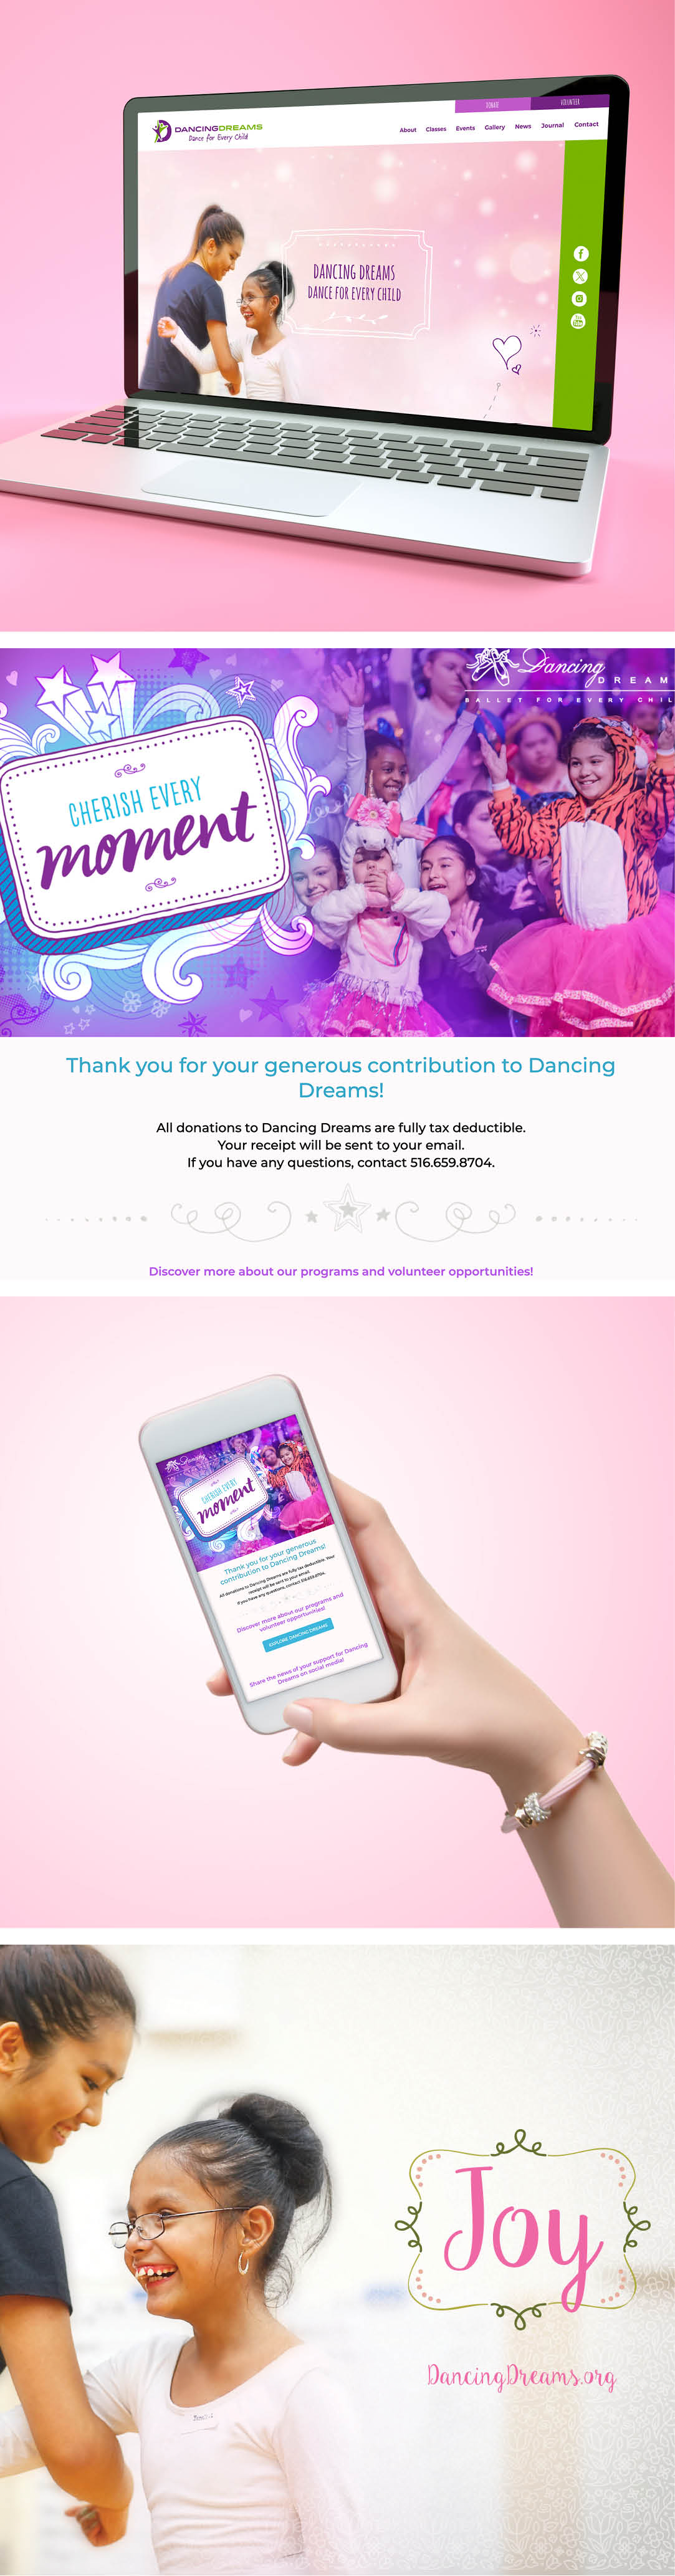 Dancing Dreams mobile site and postcard